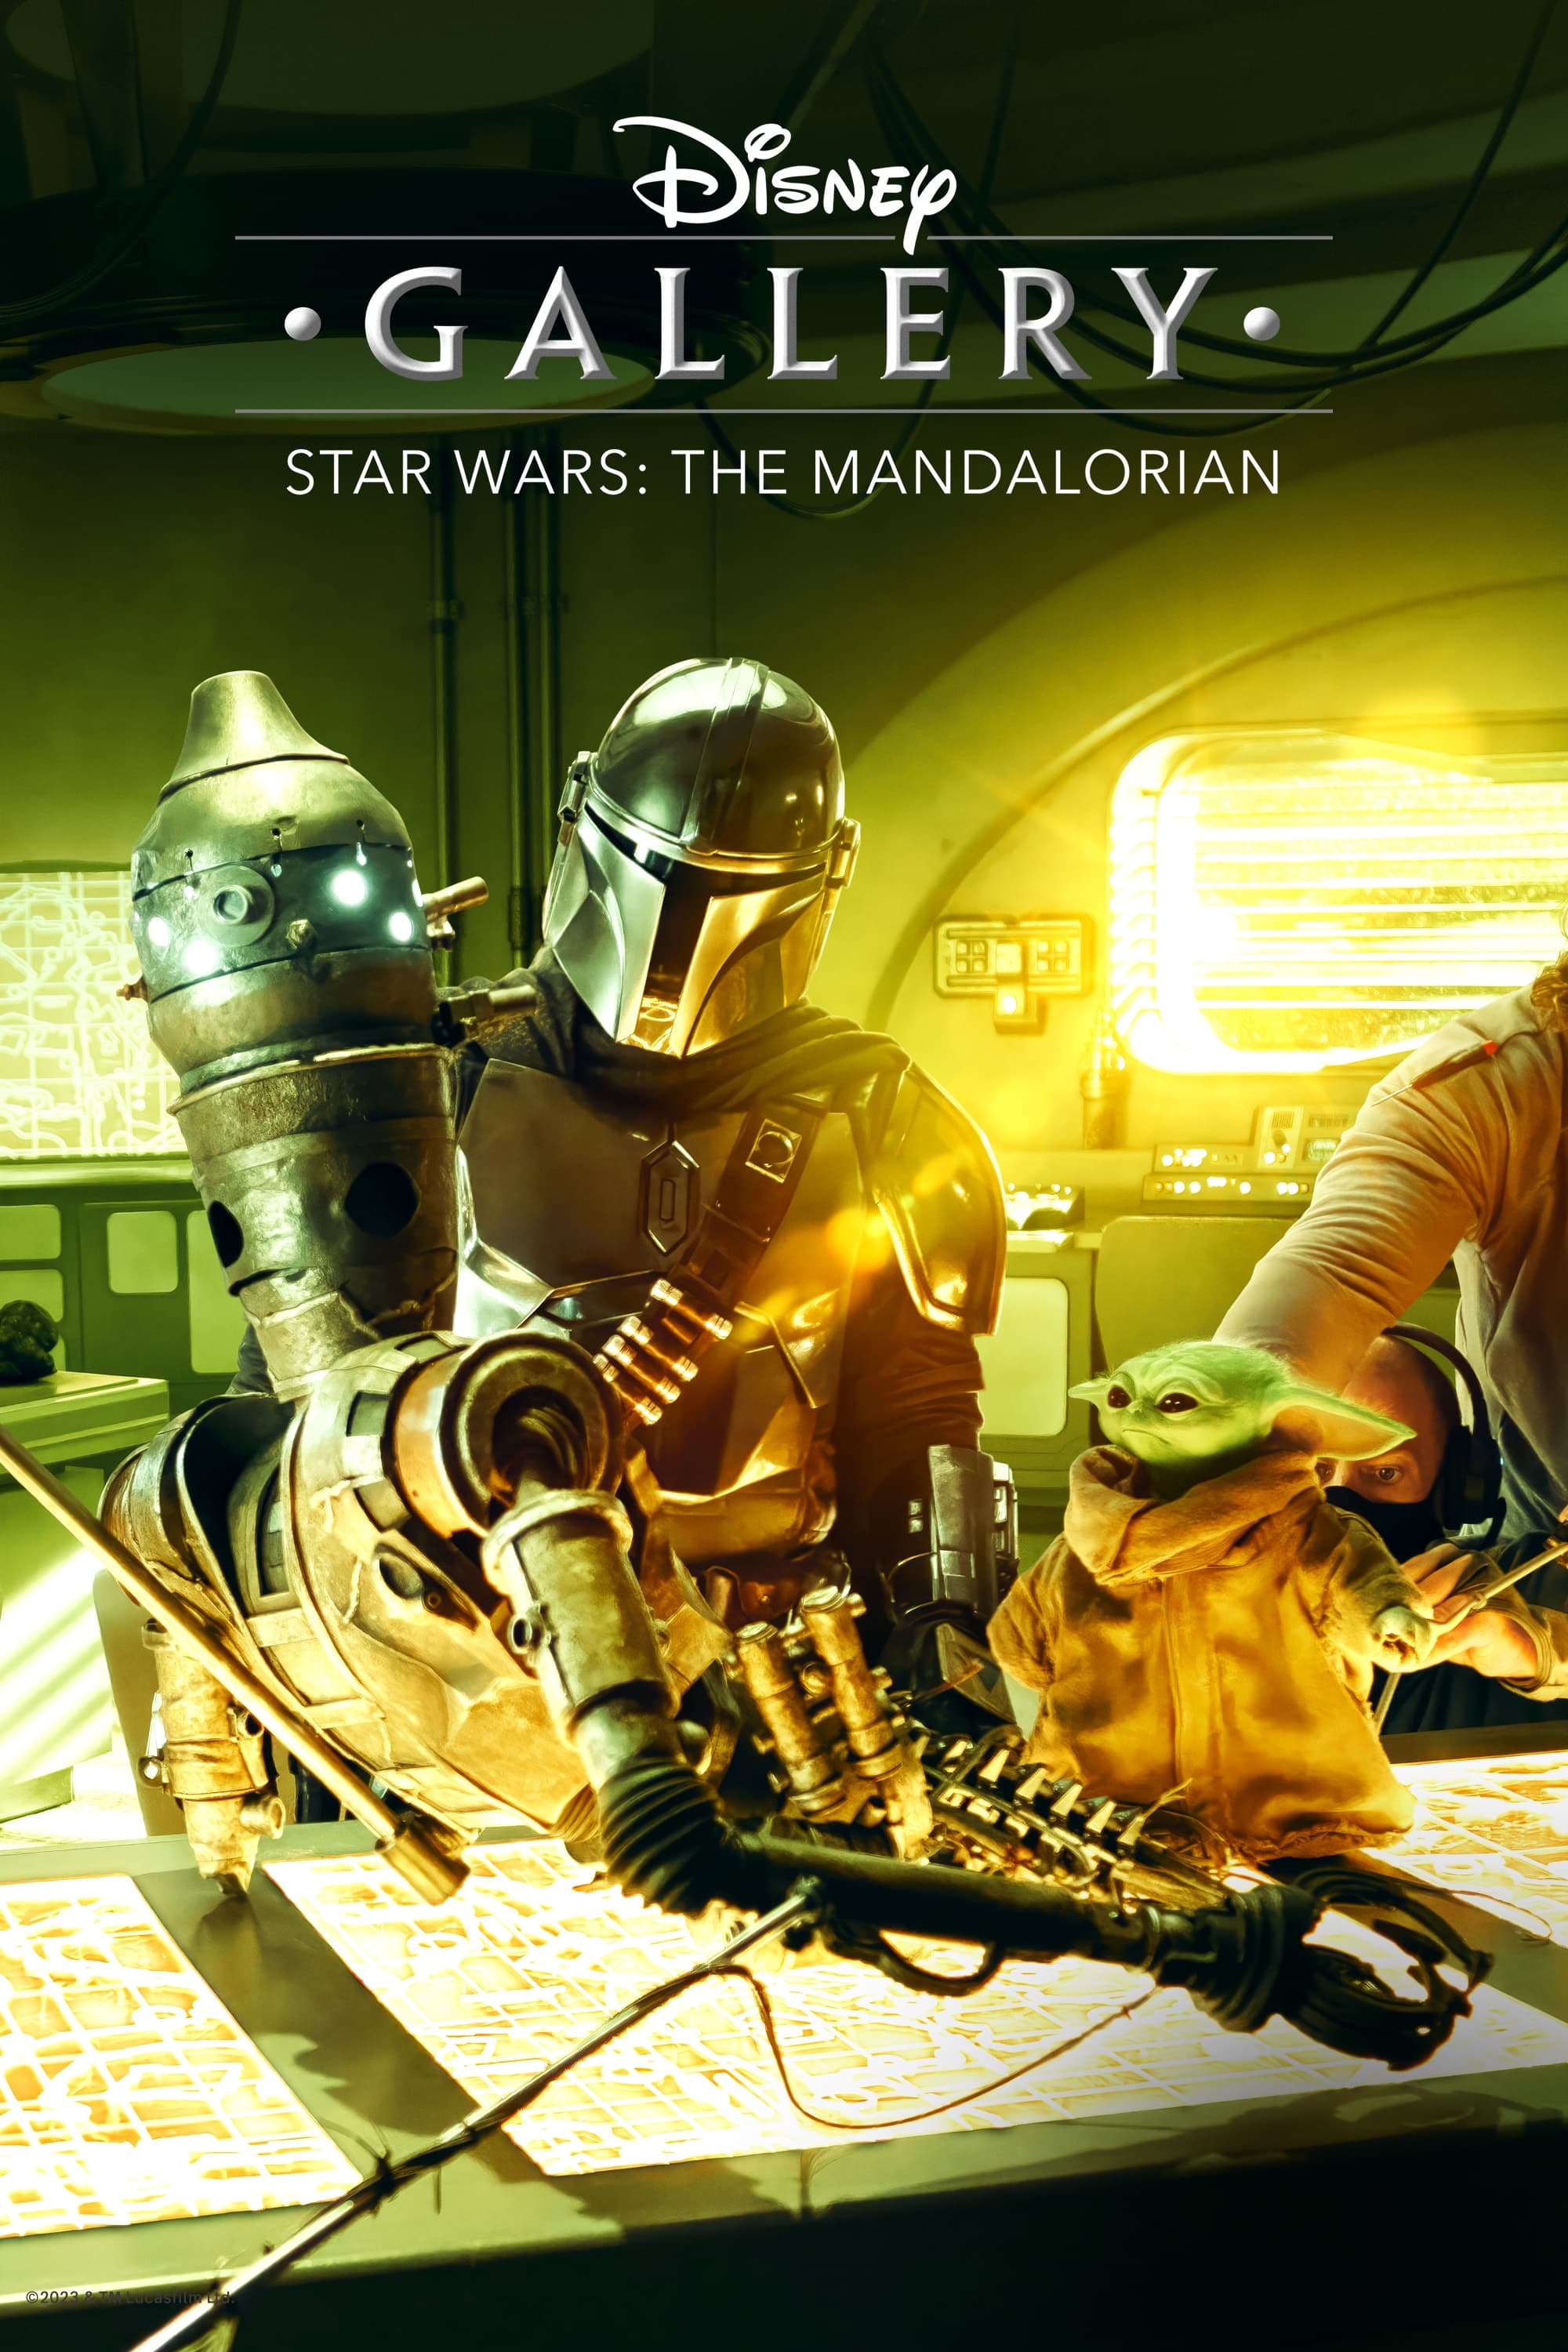 Disney Gallery / Star Wars: The Mandalorian (2020)